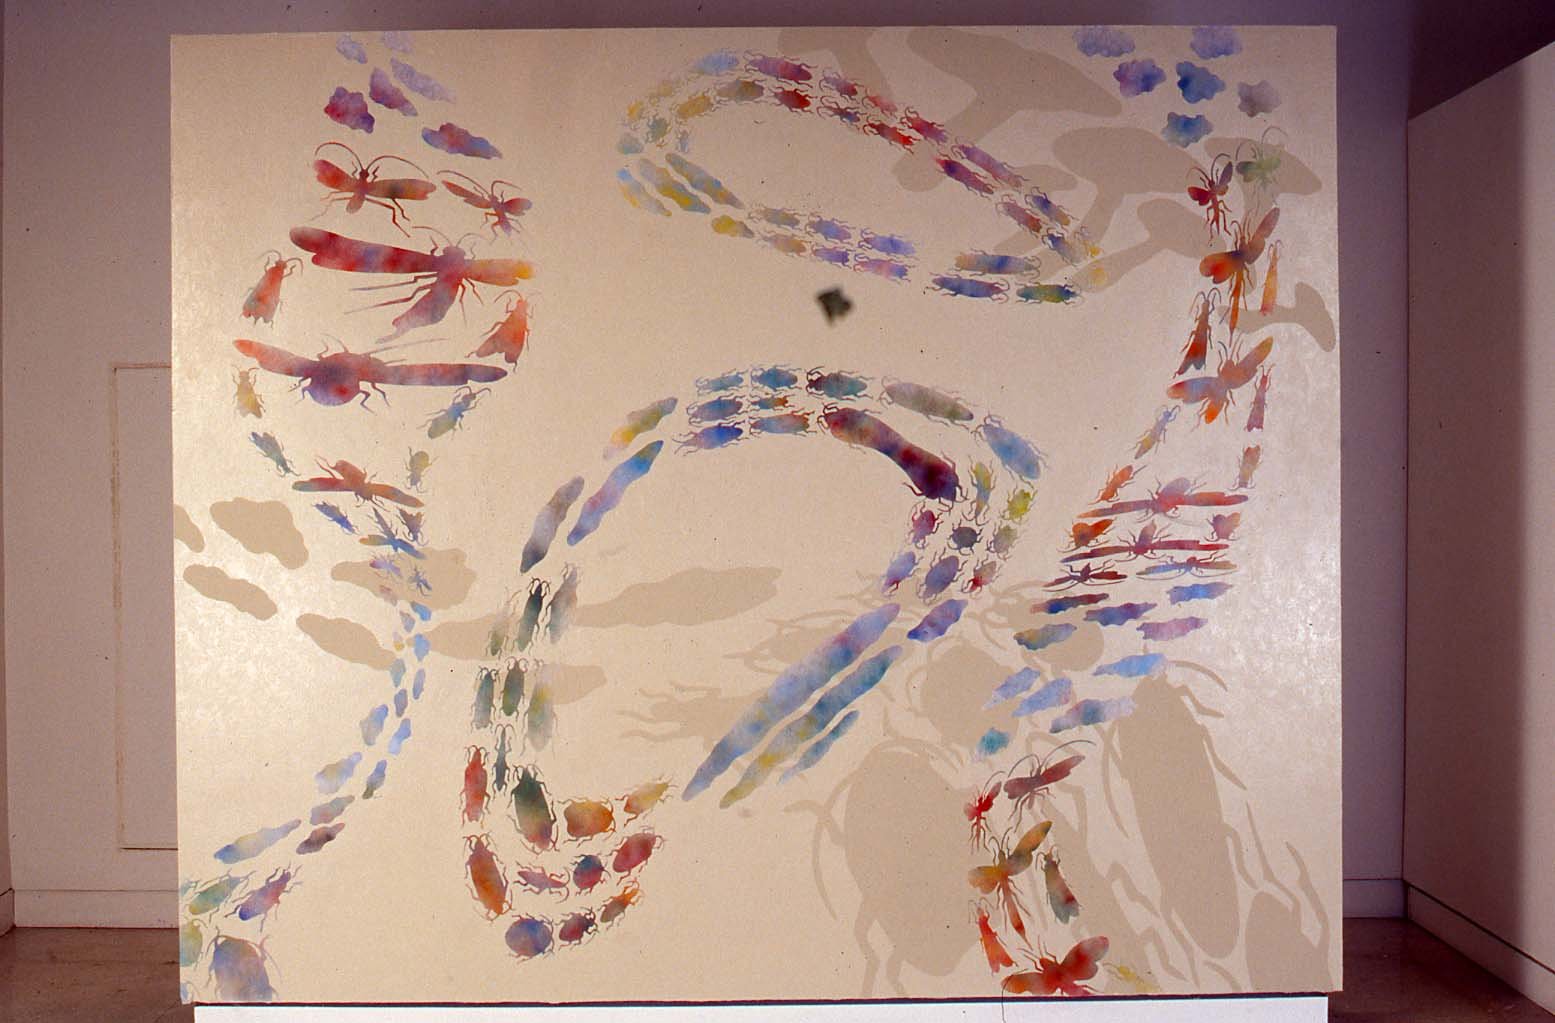   Spiders, Mushrooms &amp; Clouds   144”x144”  enamel &amp; spray paint on wall paper/wall  2002  MMOCA TRIENNIAL 